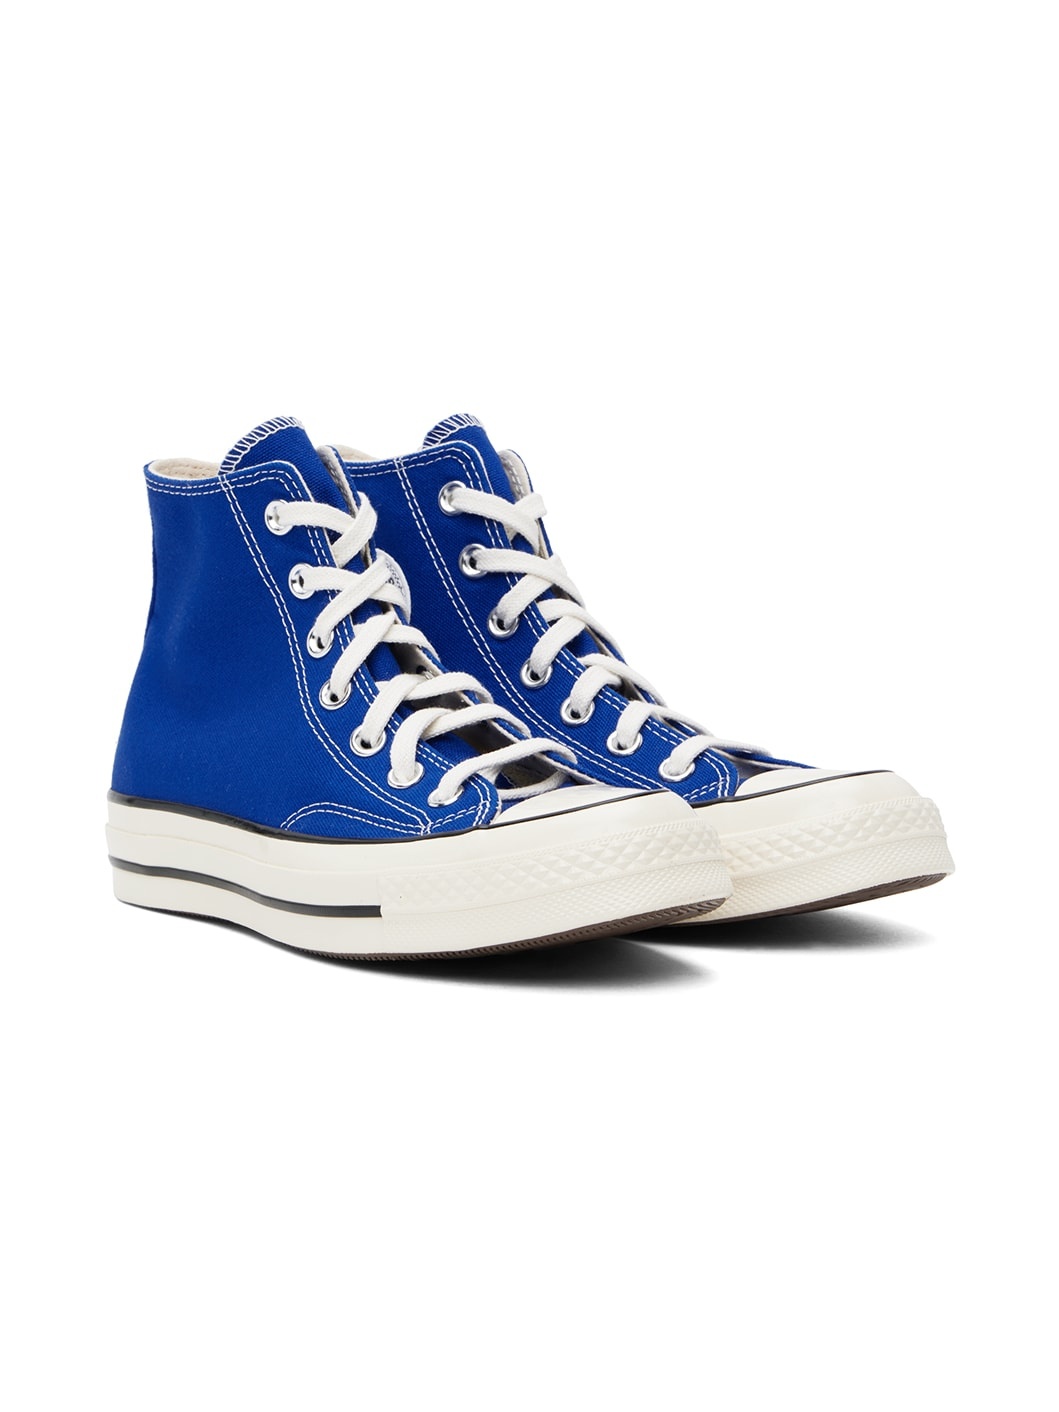 Blue Chuck 70 High Top Sneakers - 4